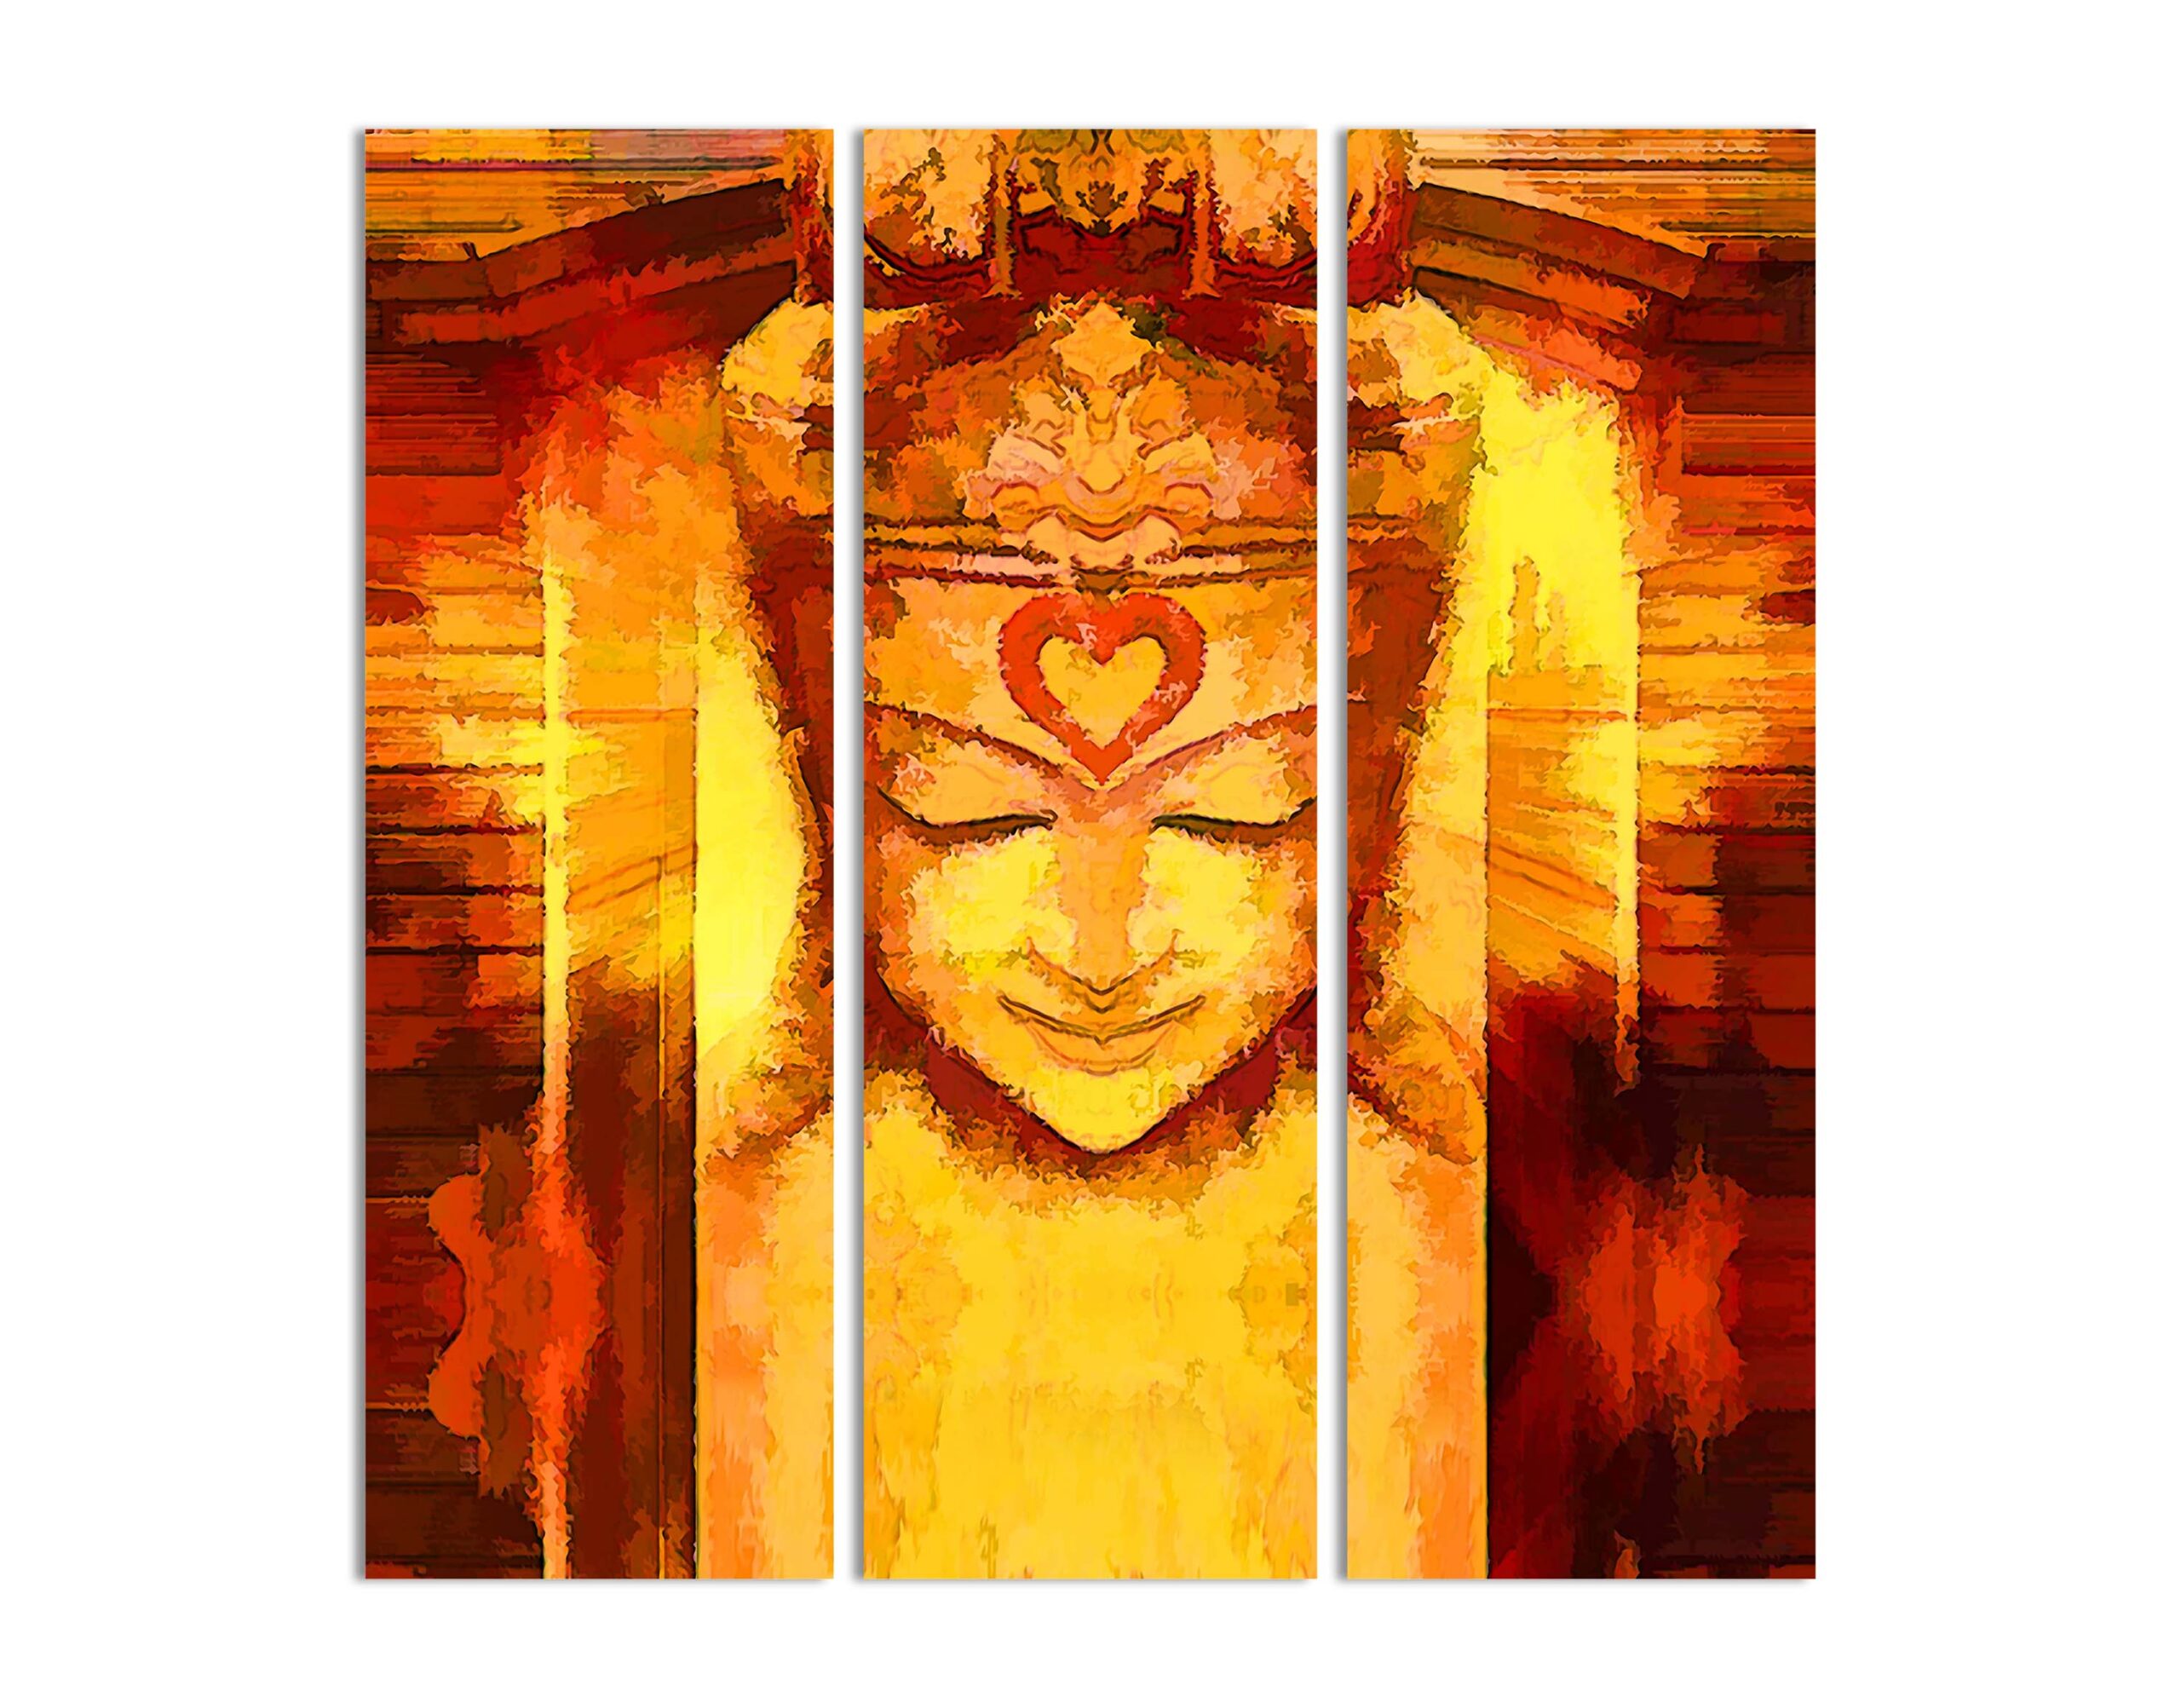 Avatarbuddha Painting Art Wall Digital Print